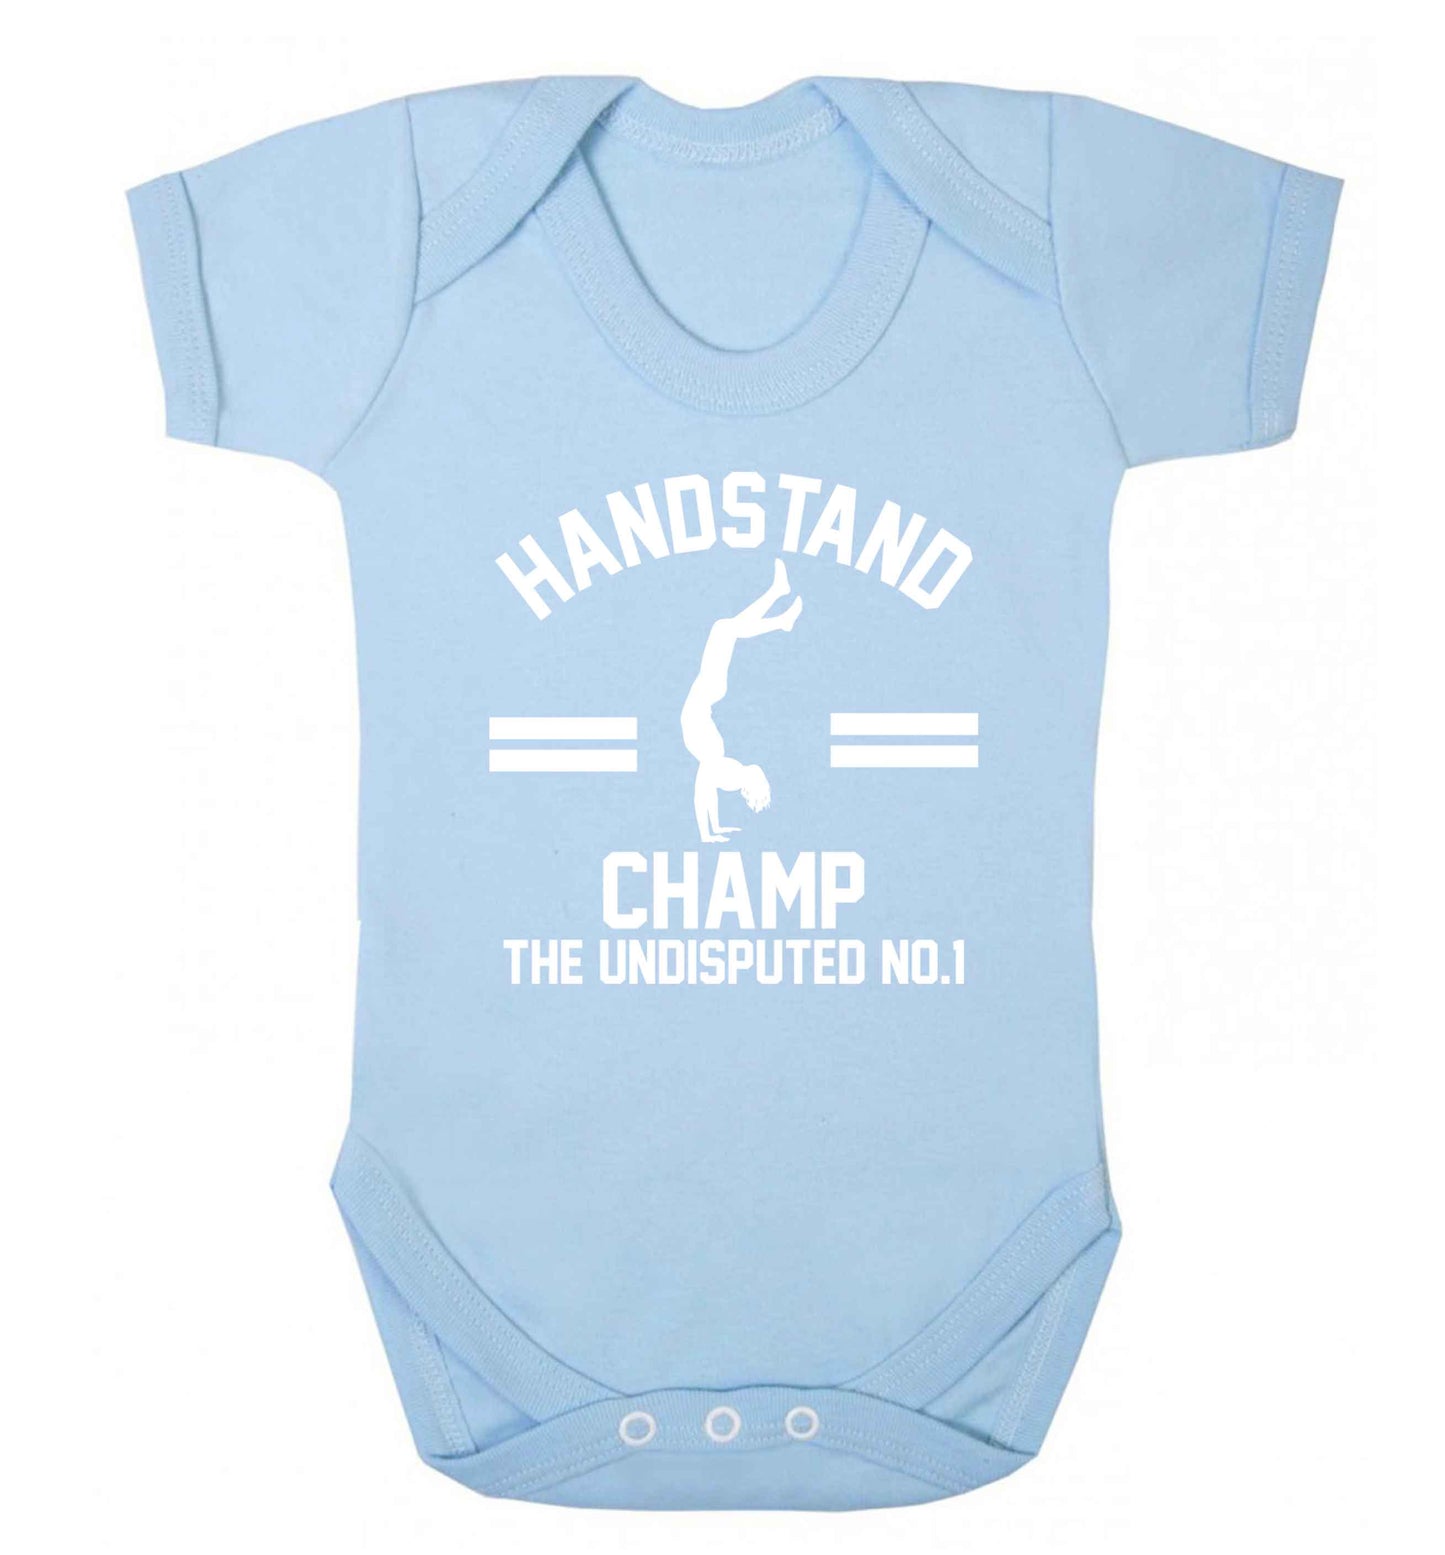 Undisputed handstand championship no.1  Baby Vest pale blue 18-24 months